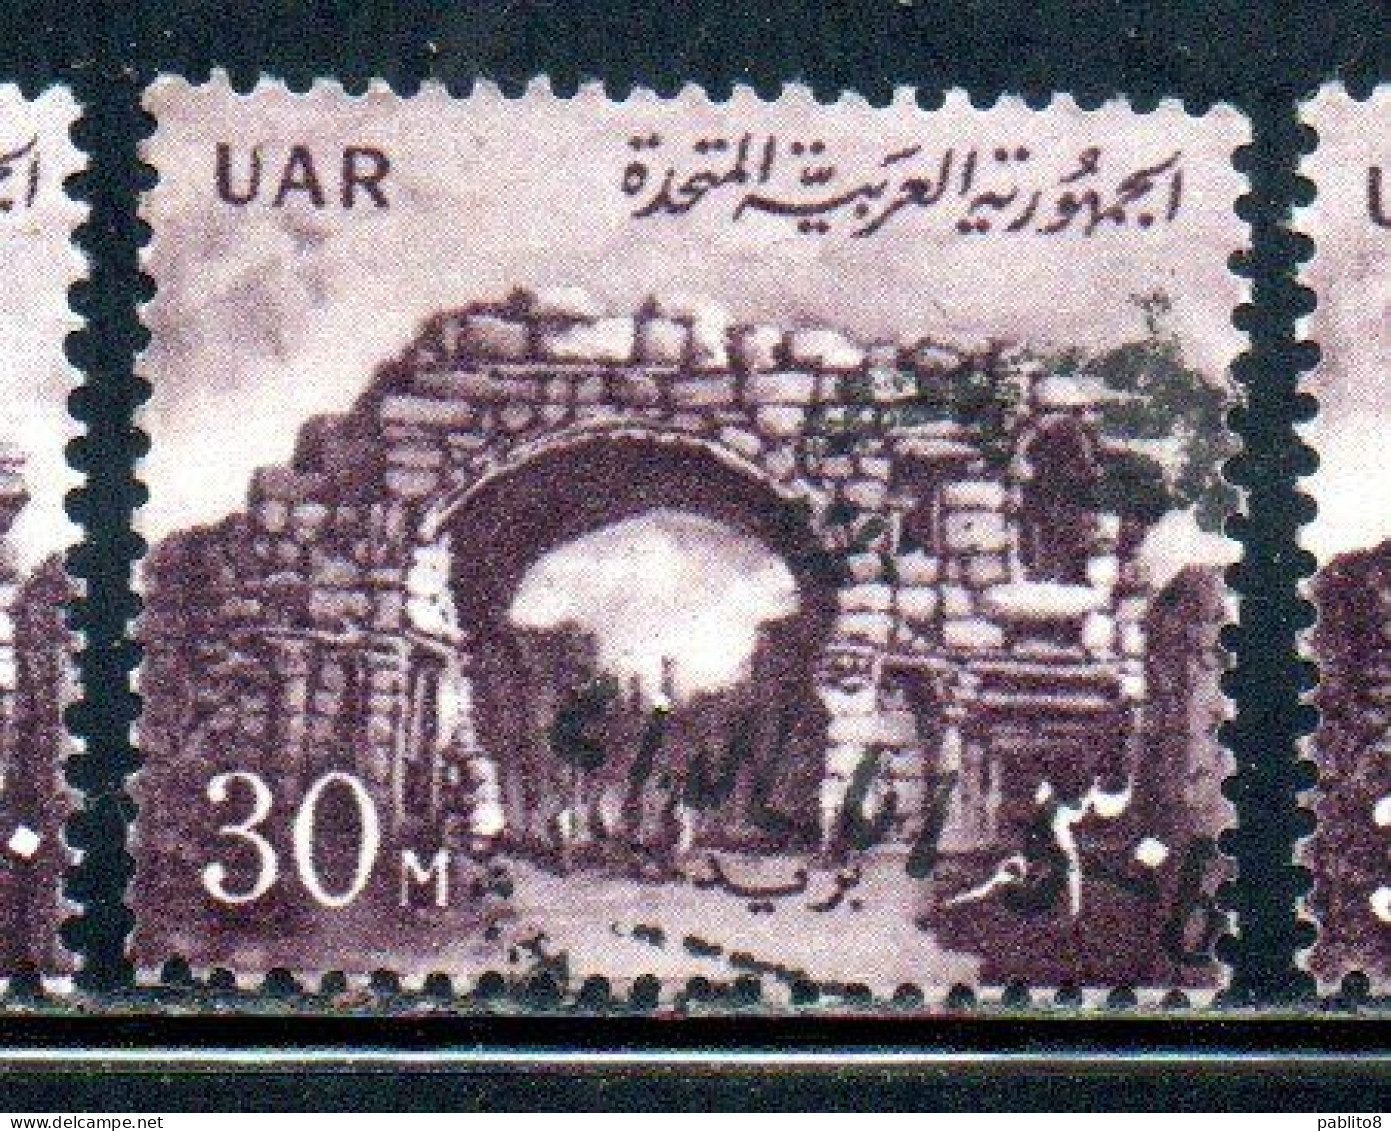 UAR EGYPT EGITTO 1959 1960 ST. SIMON'S GATE BOSRA SYRIA  30m MH - Neufs